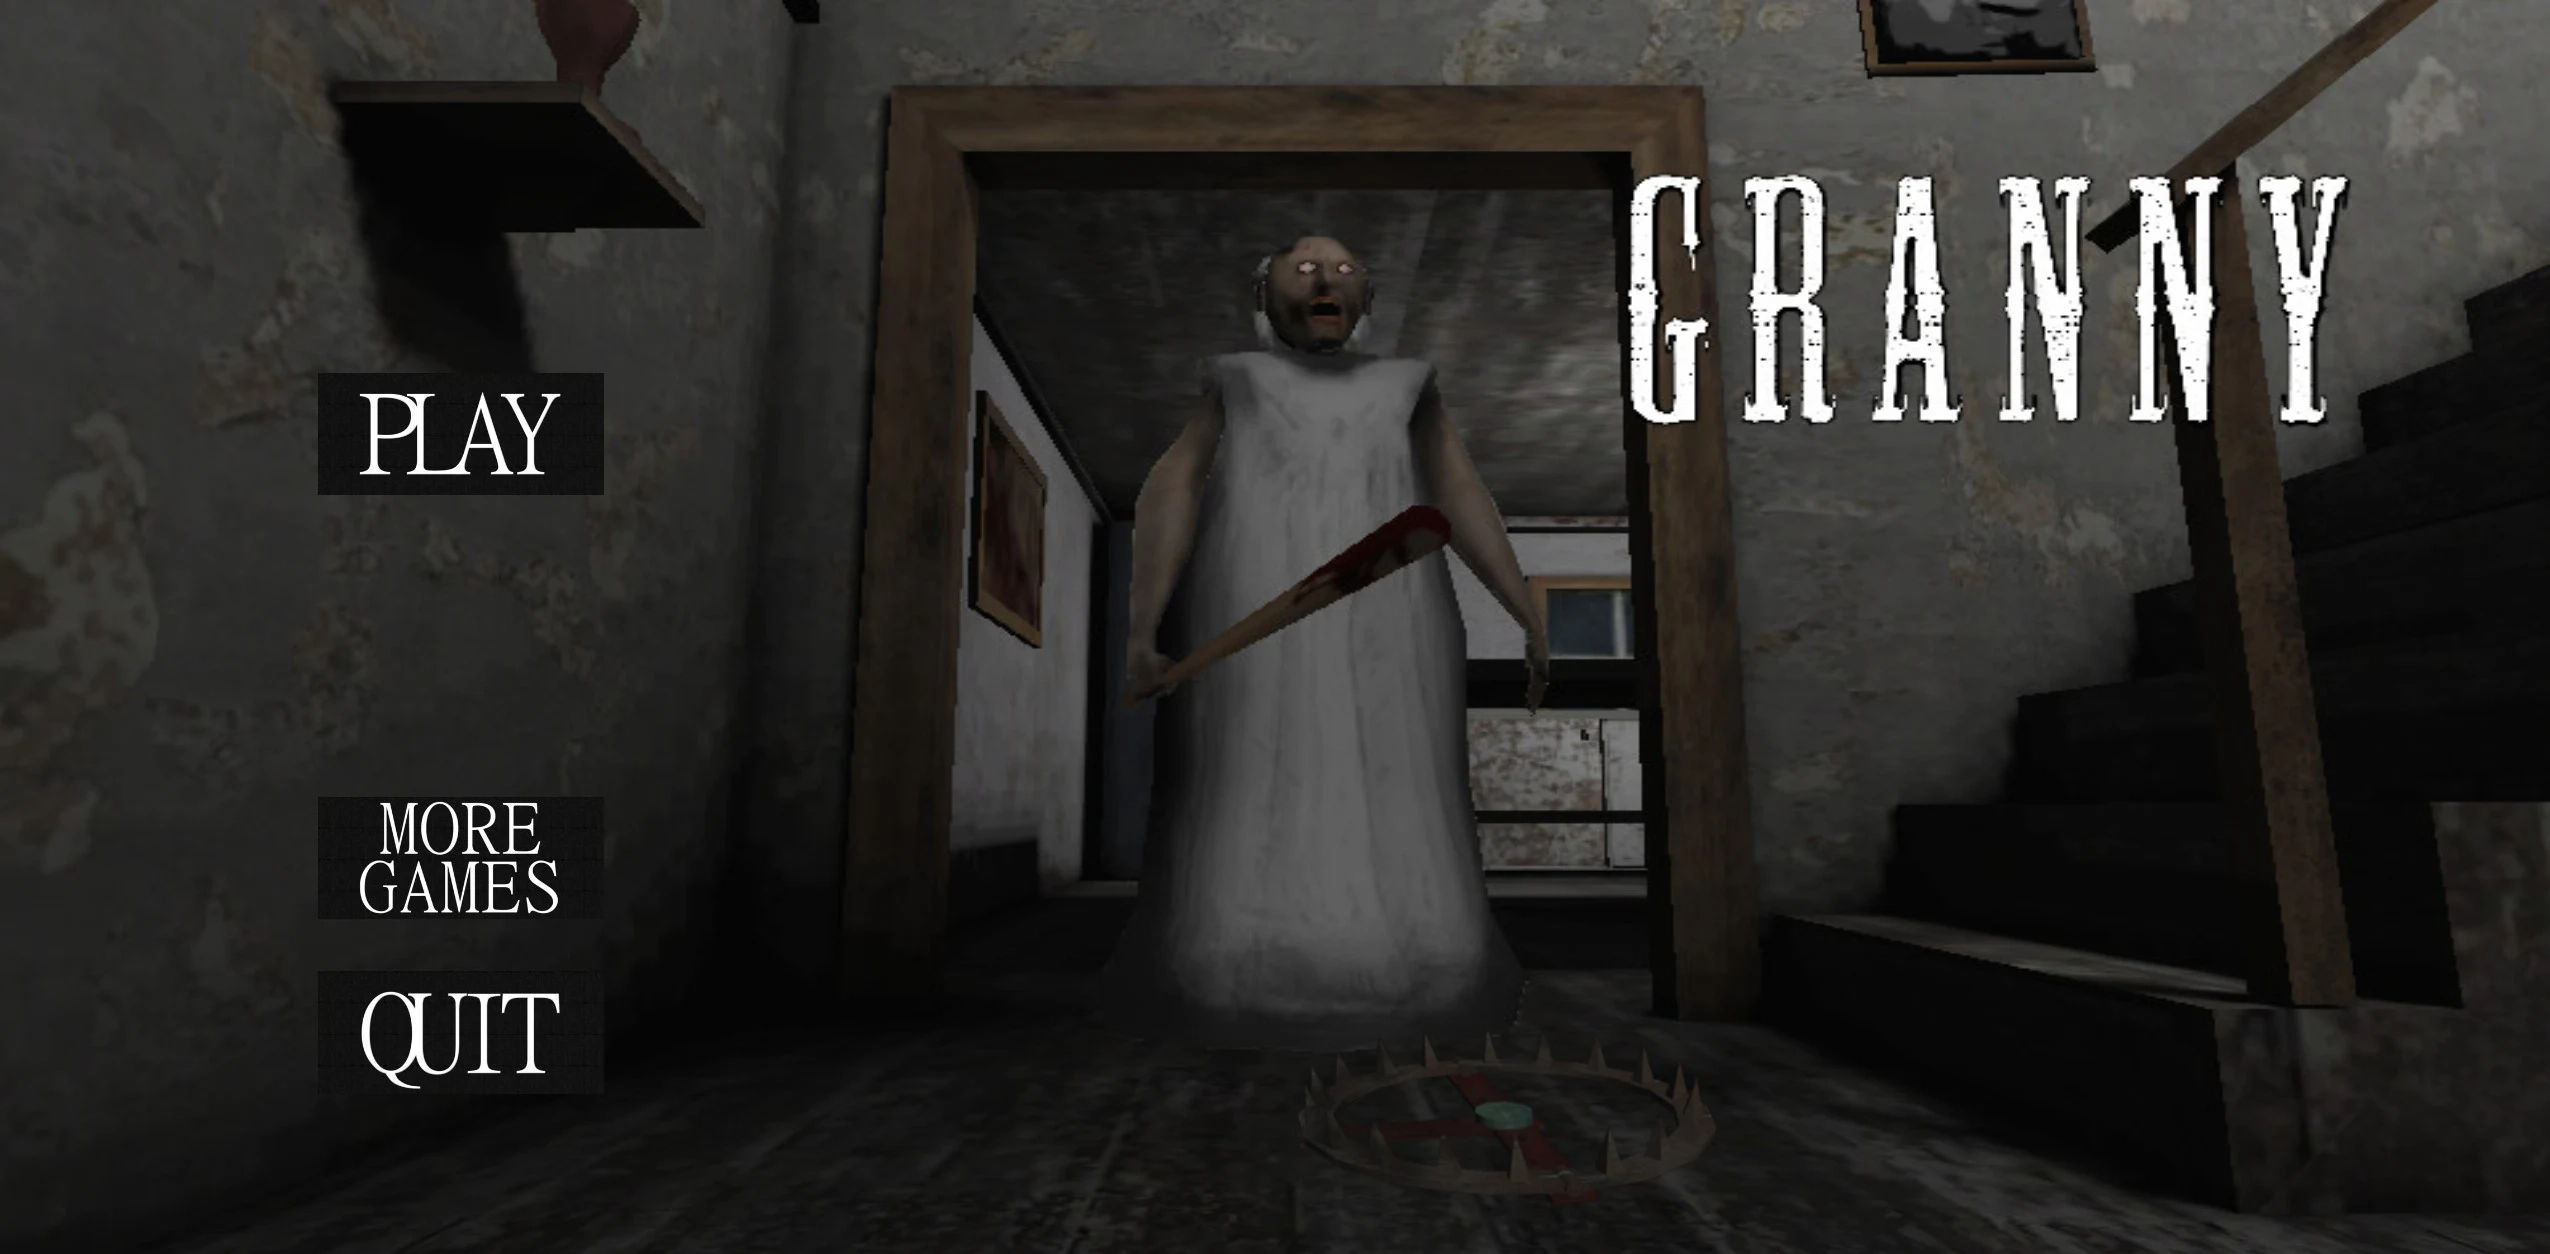 Granny Games Online